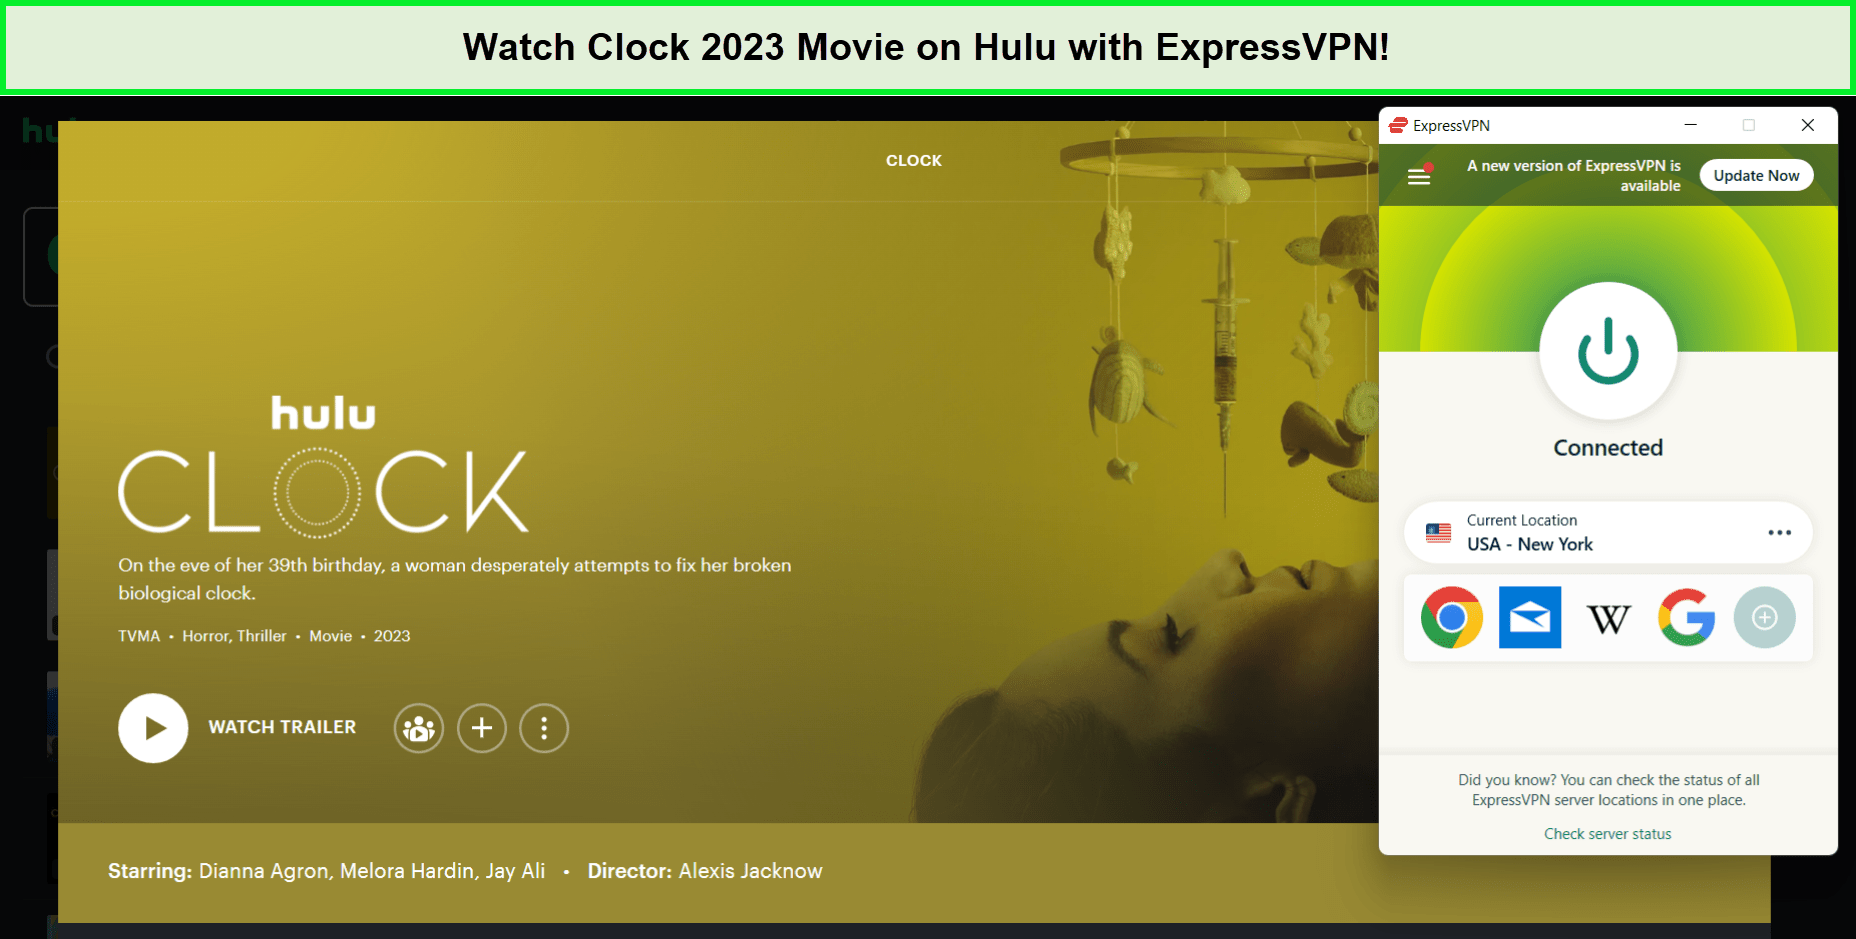 With-ExpressVPN-Watch-Clock-2023-Movie-on-Hulu-in-Spain